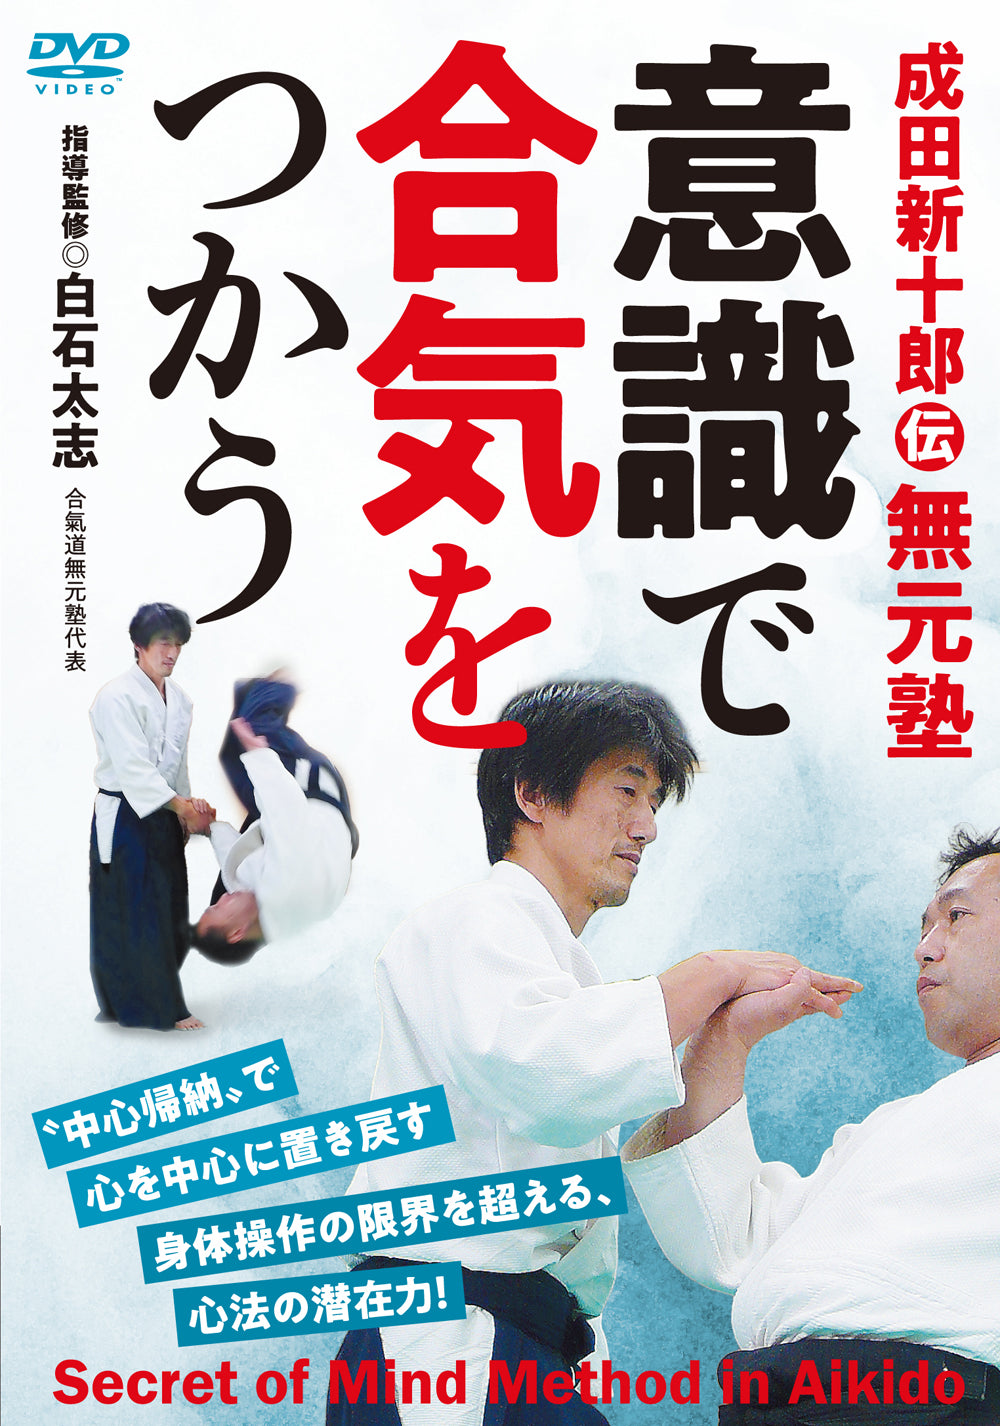 Secret of Mind Method in Aikido DVD by Futoshi Shiraishi